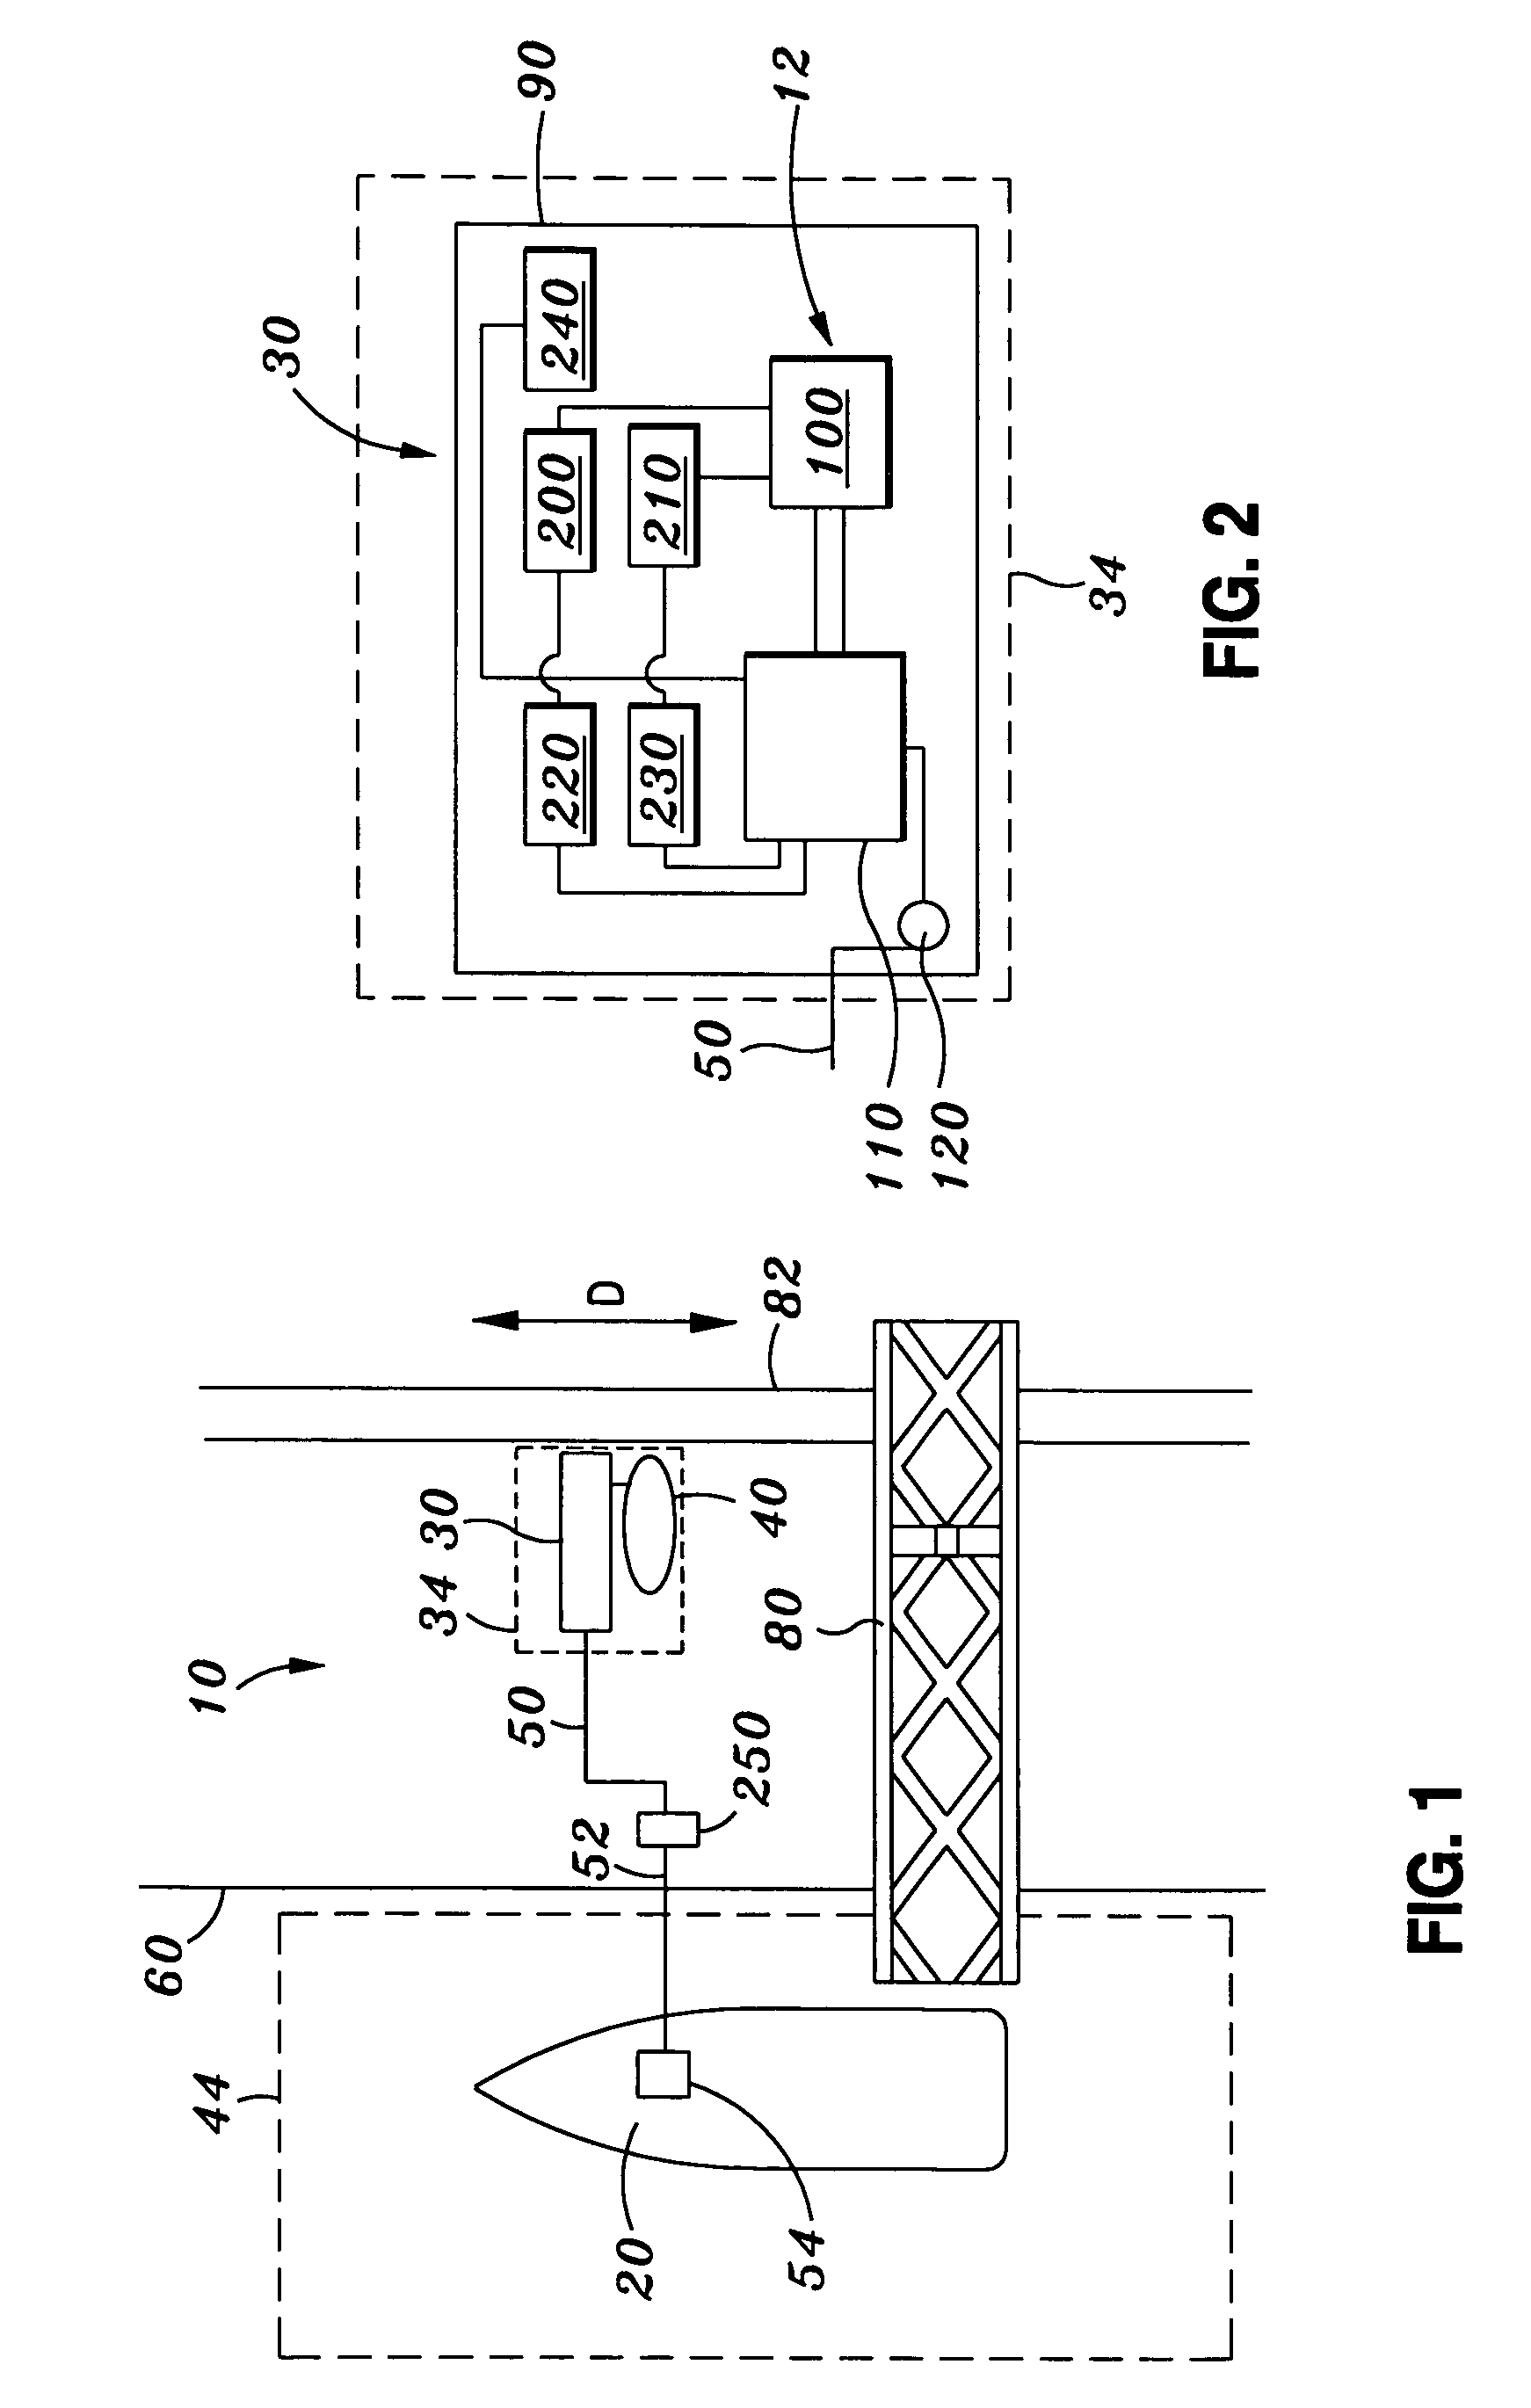 Modular power generation apparatus and method